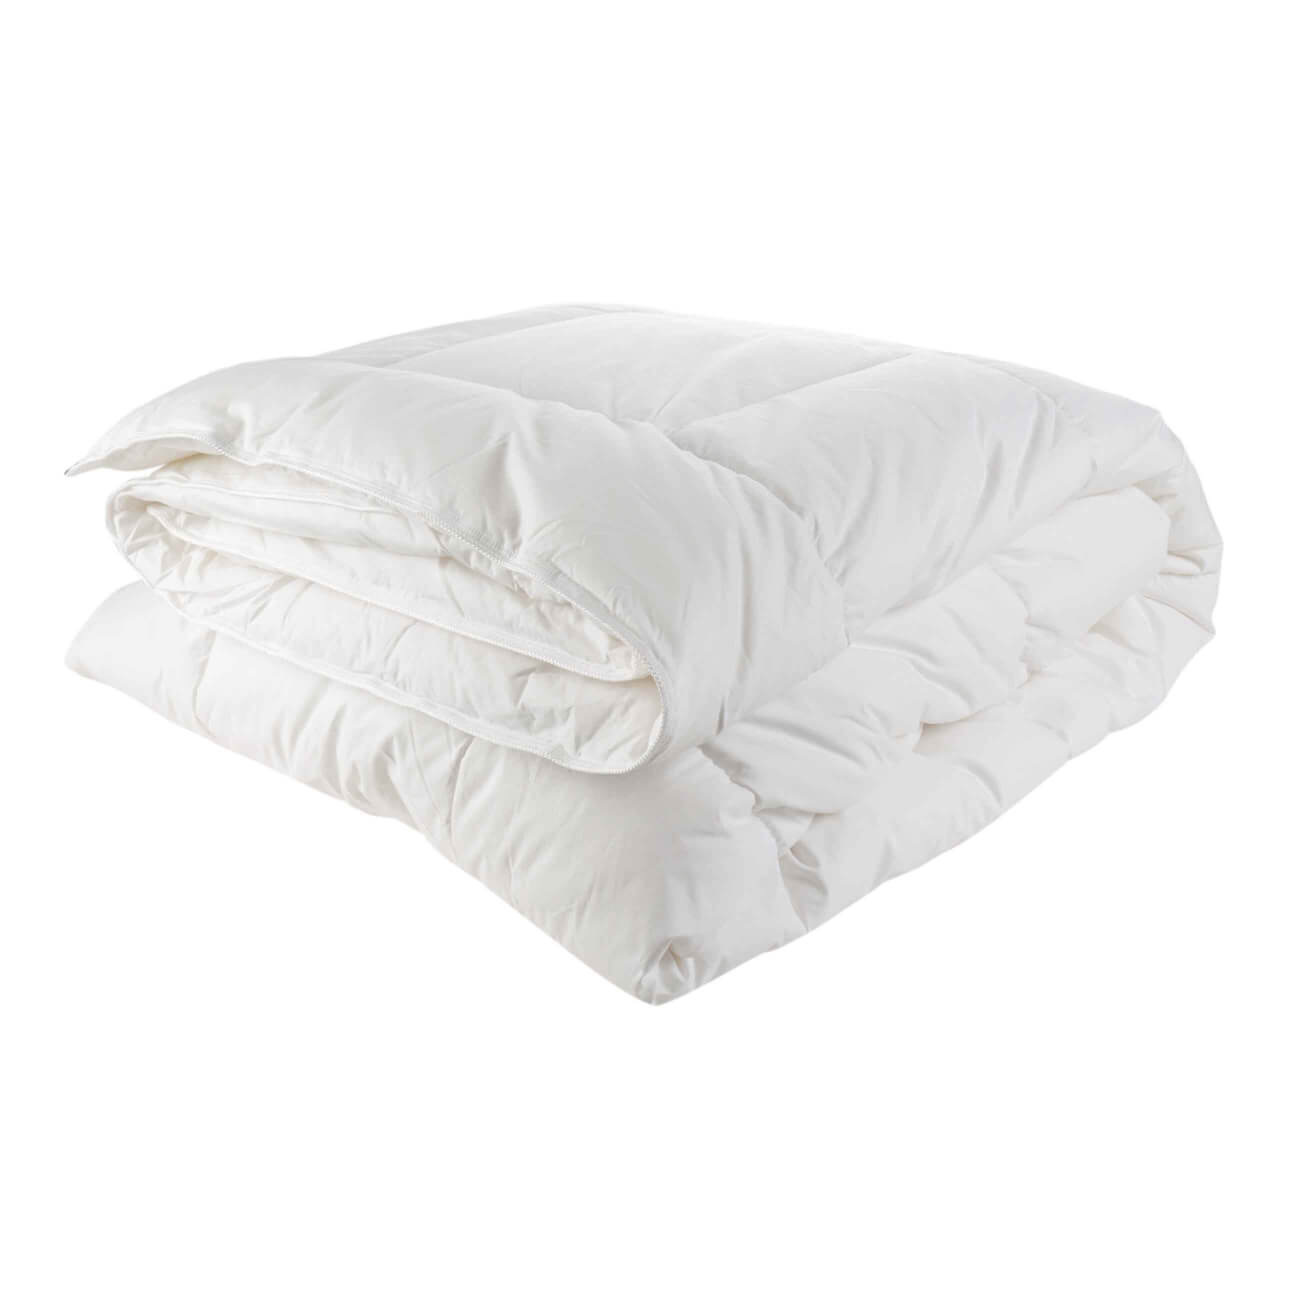 Одеяло, 140х200 см, хлопок/микрофибра, Soft cotton набор салфеток из микрофибры 5шт mfs 01 5 размер 30х30см рыжий кот 310238